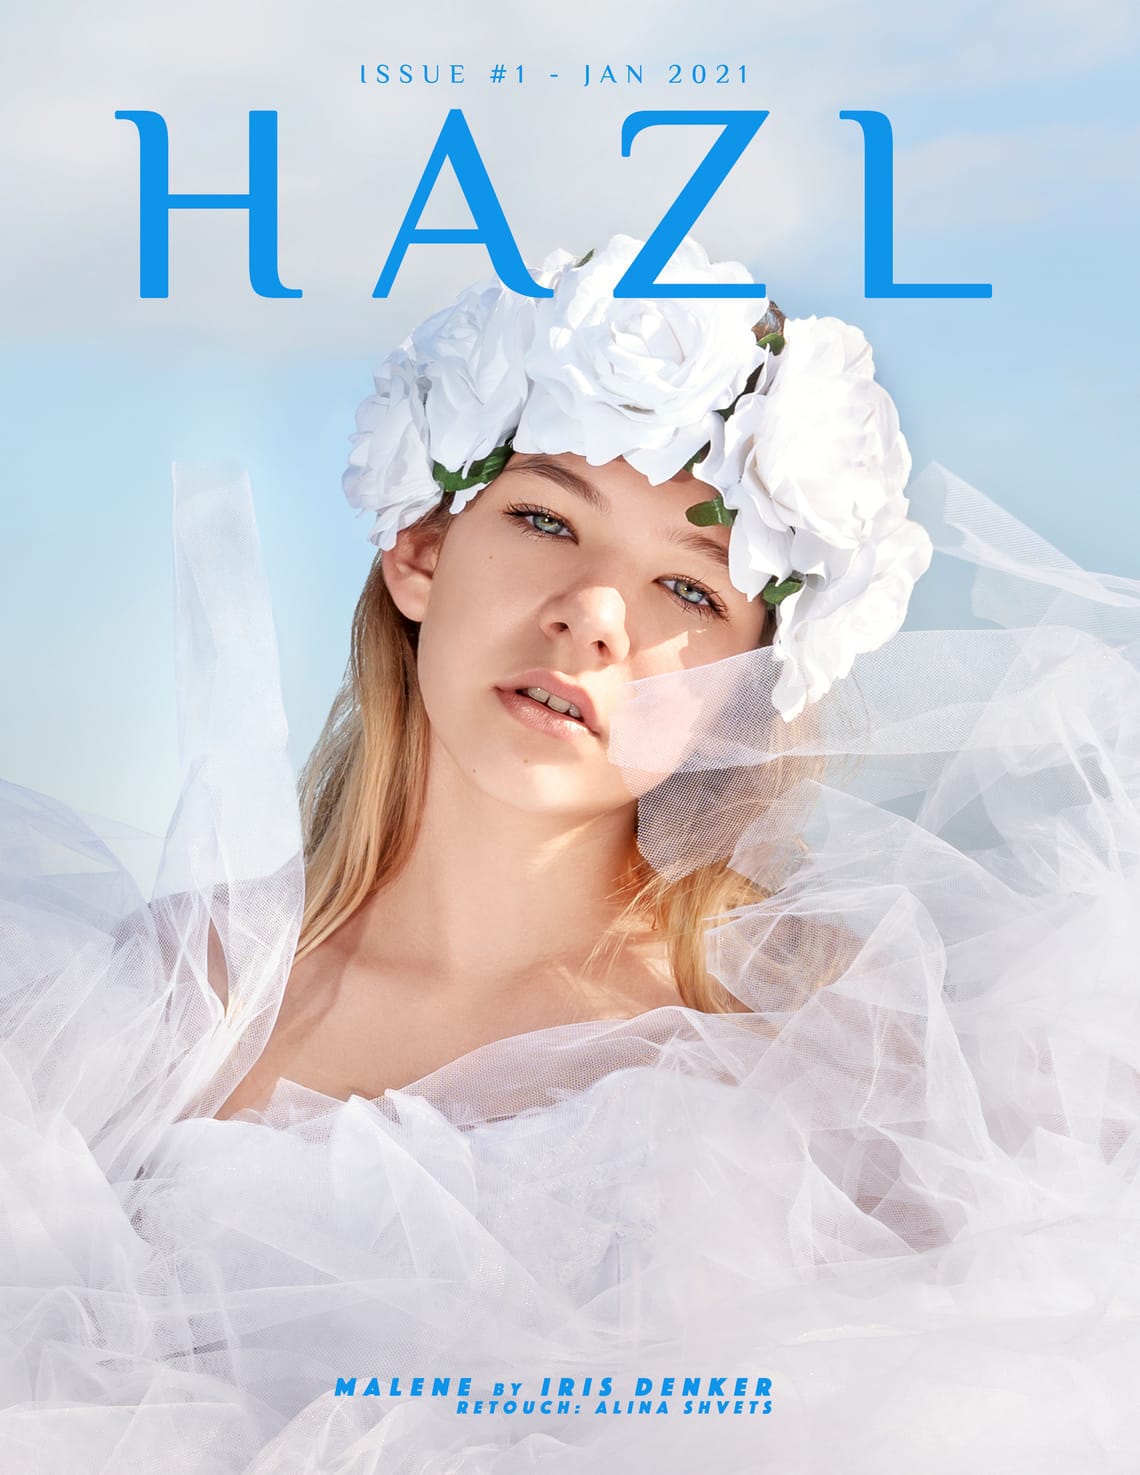 HAZL Magazine Issue #1 -  January 2021 Launched Worldwide